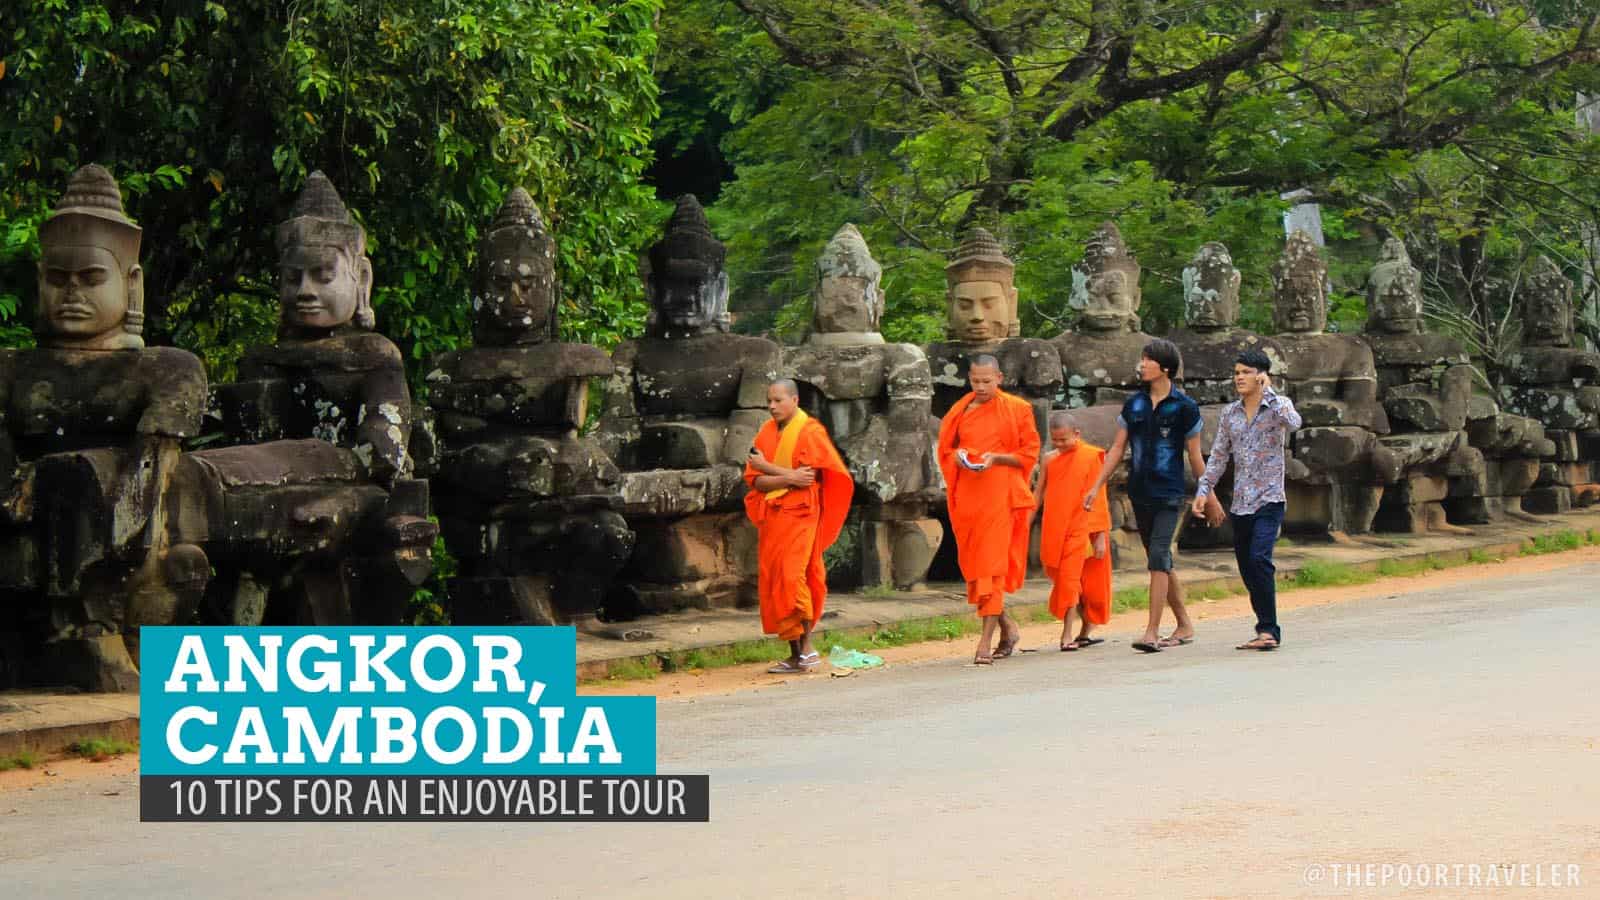 Angkor, Cambodia: 10 Tips for an Enjoyable Tour